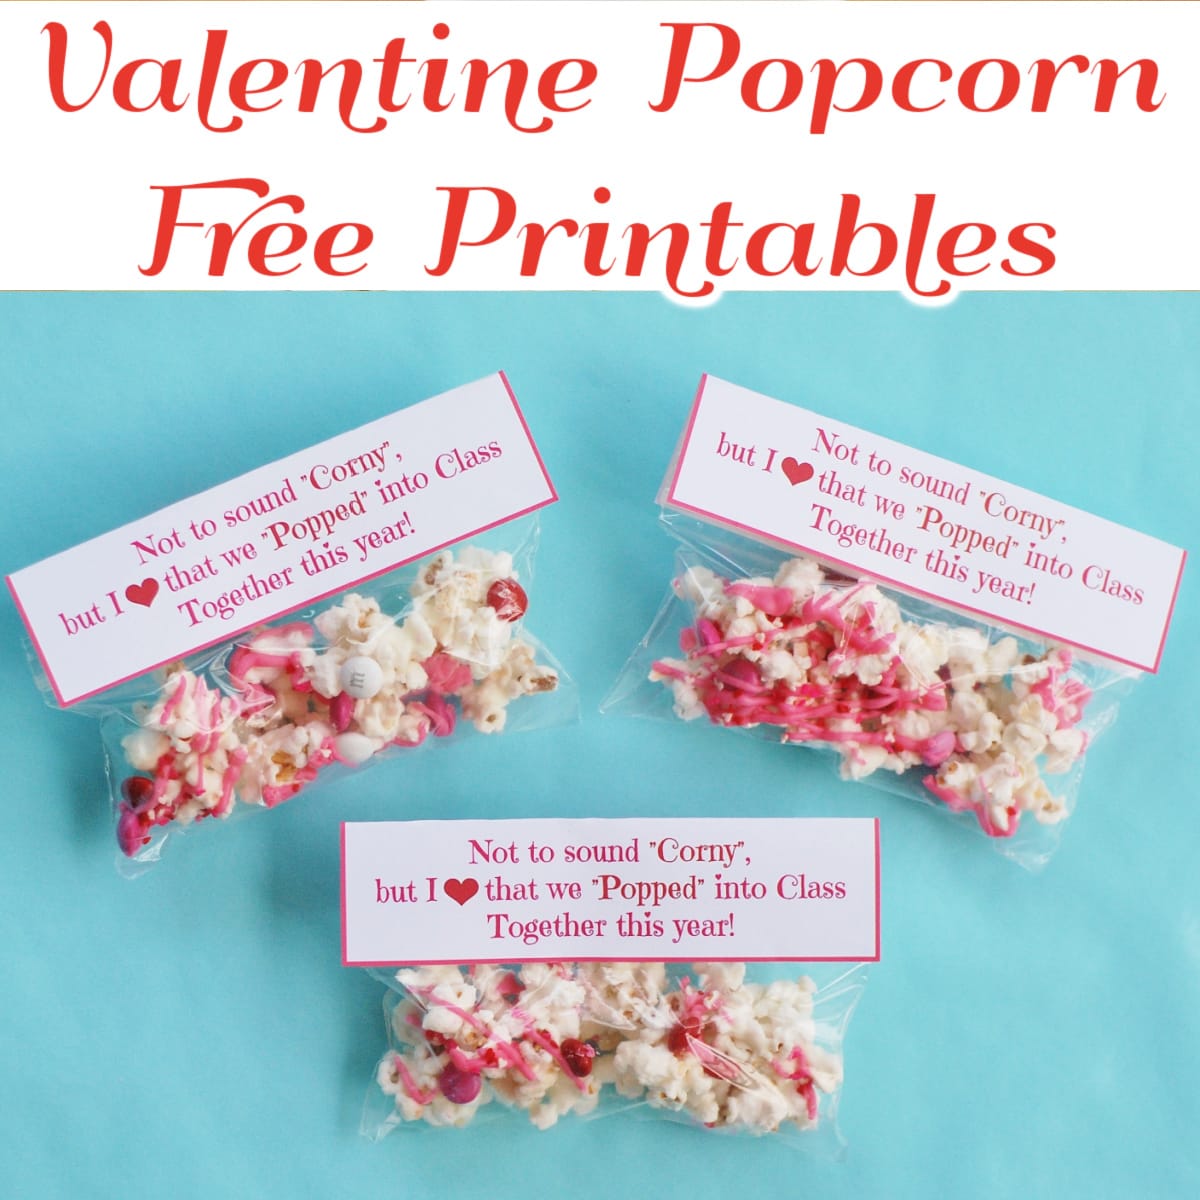 Valentine Popcorn Free Printables